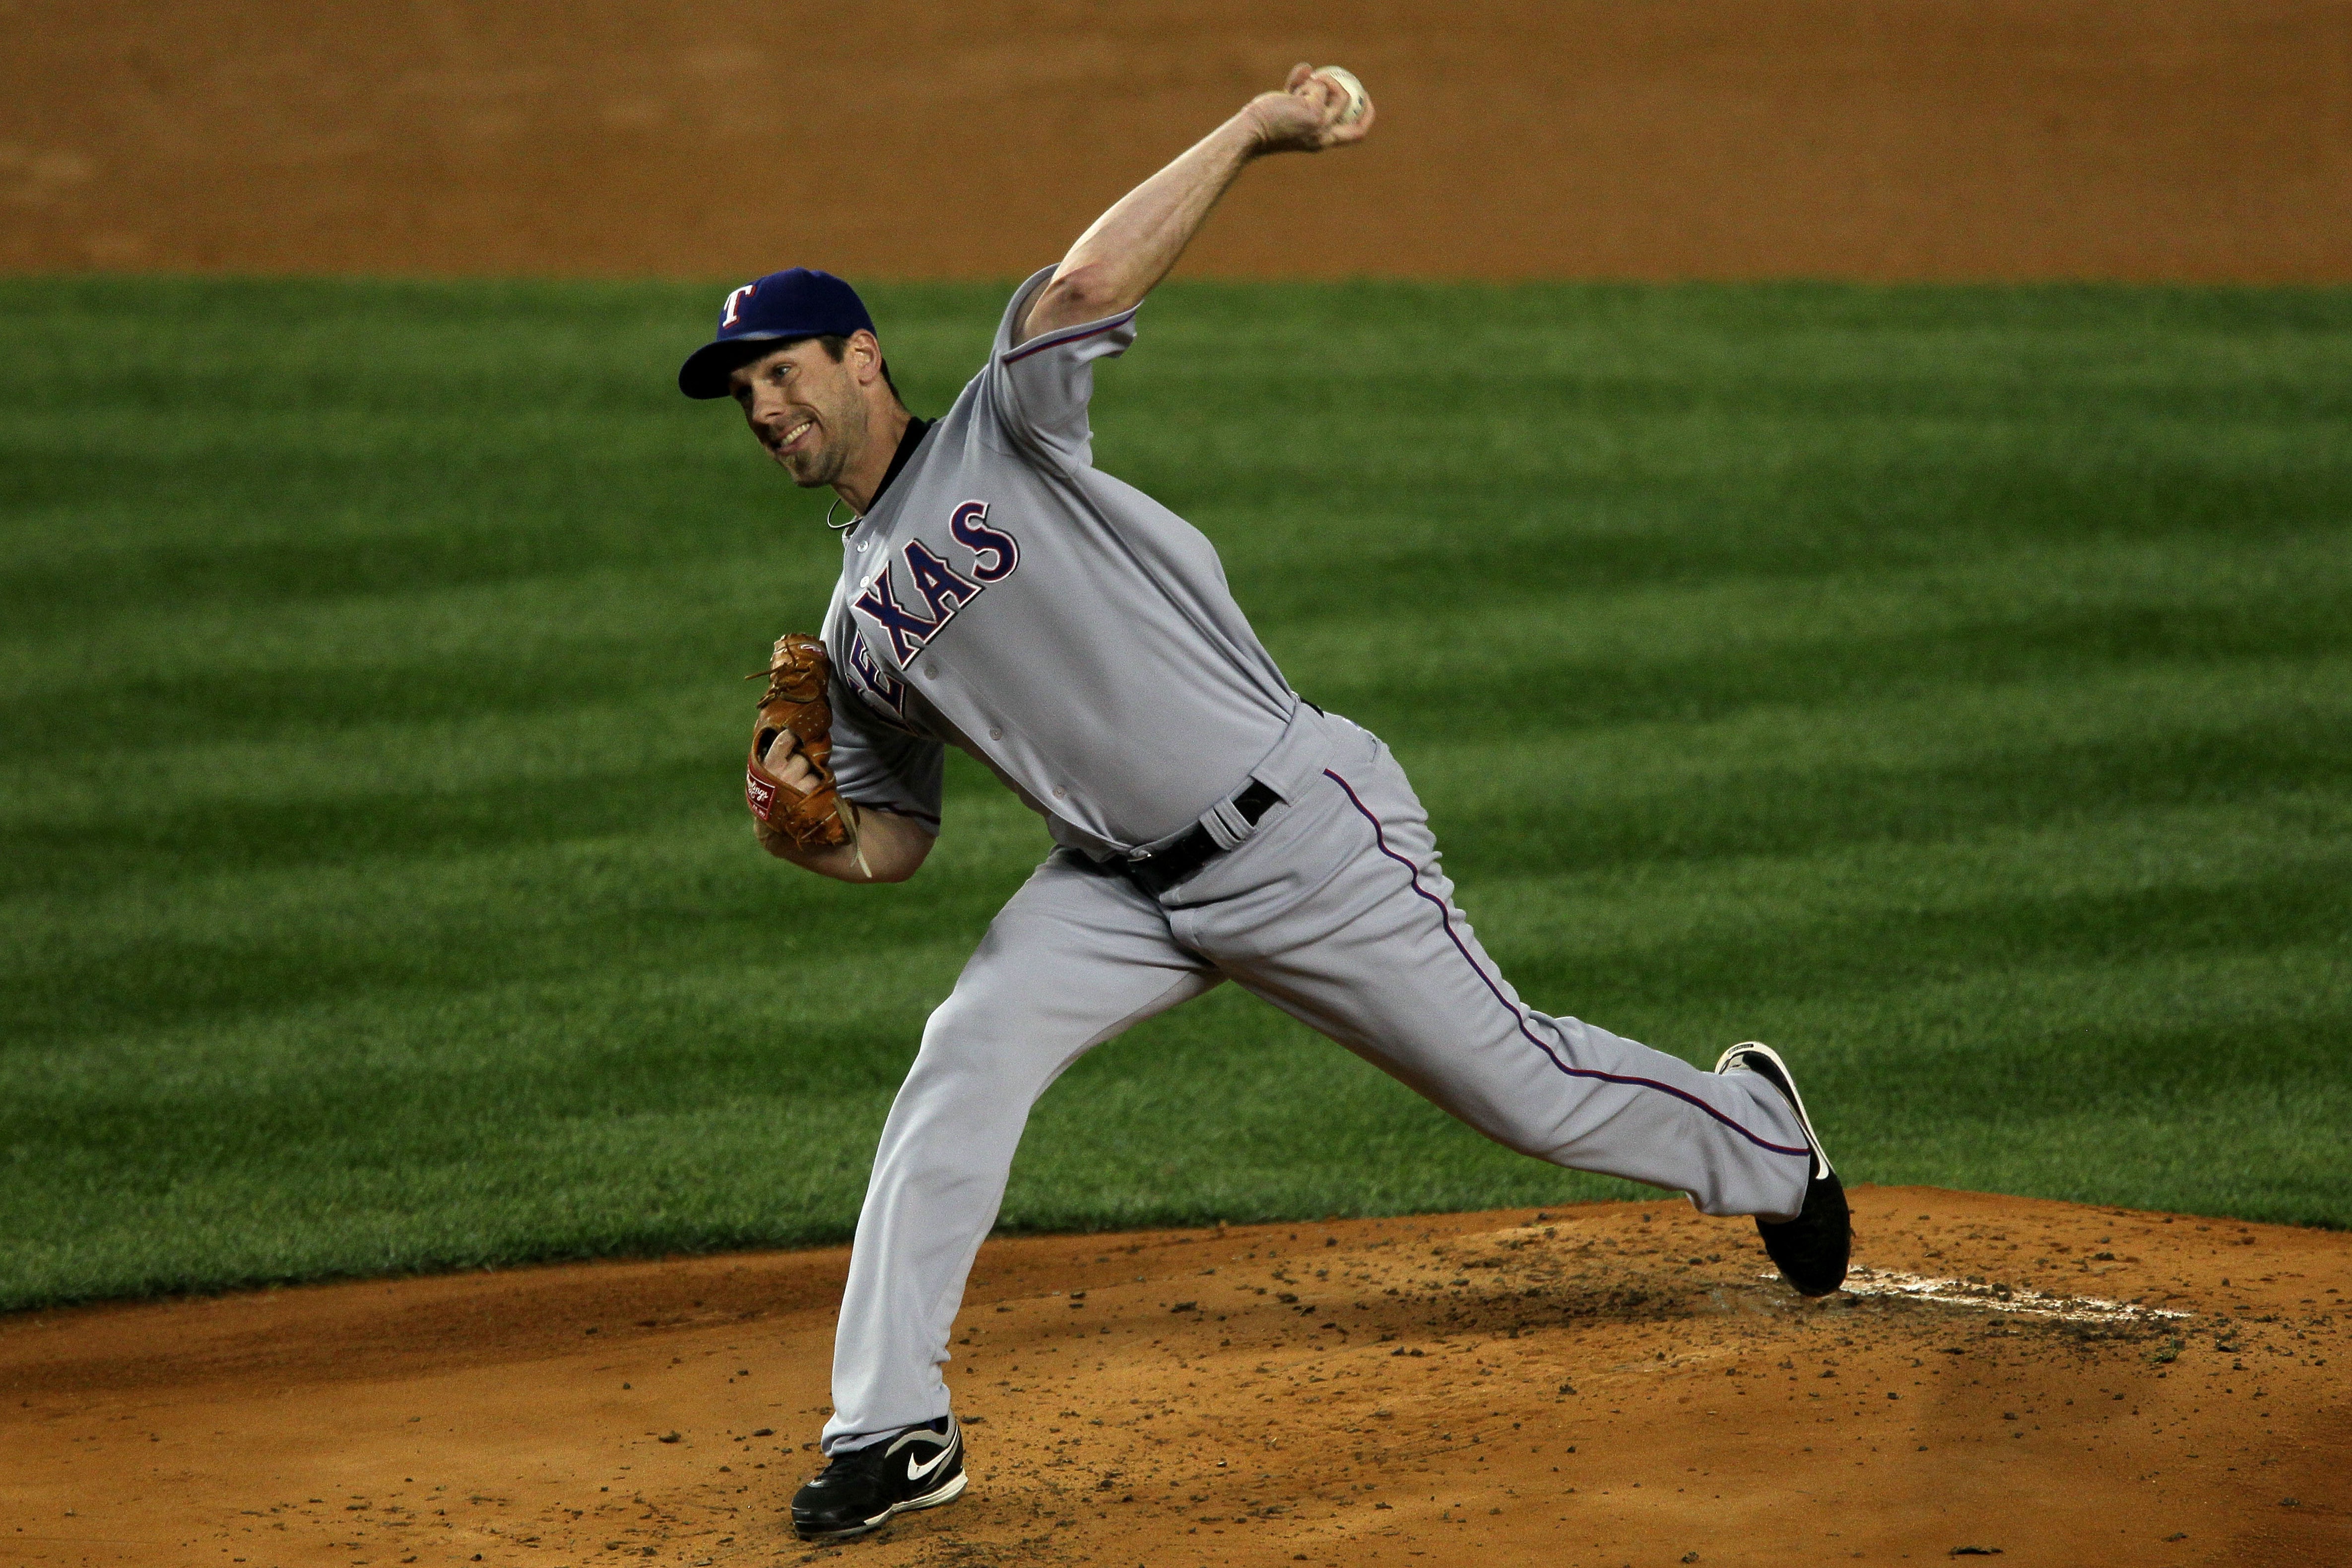 MLB Playoffs: The secret of Texas Rangers left-hander Cliff Lee's